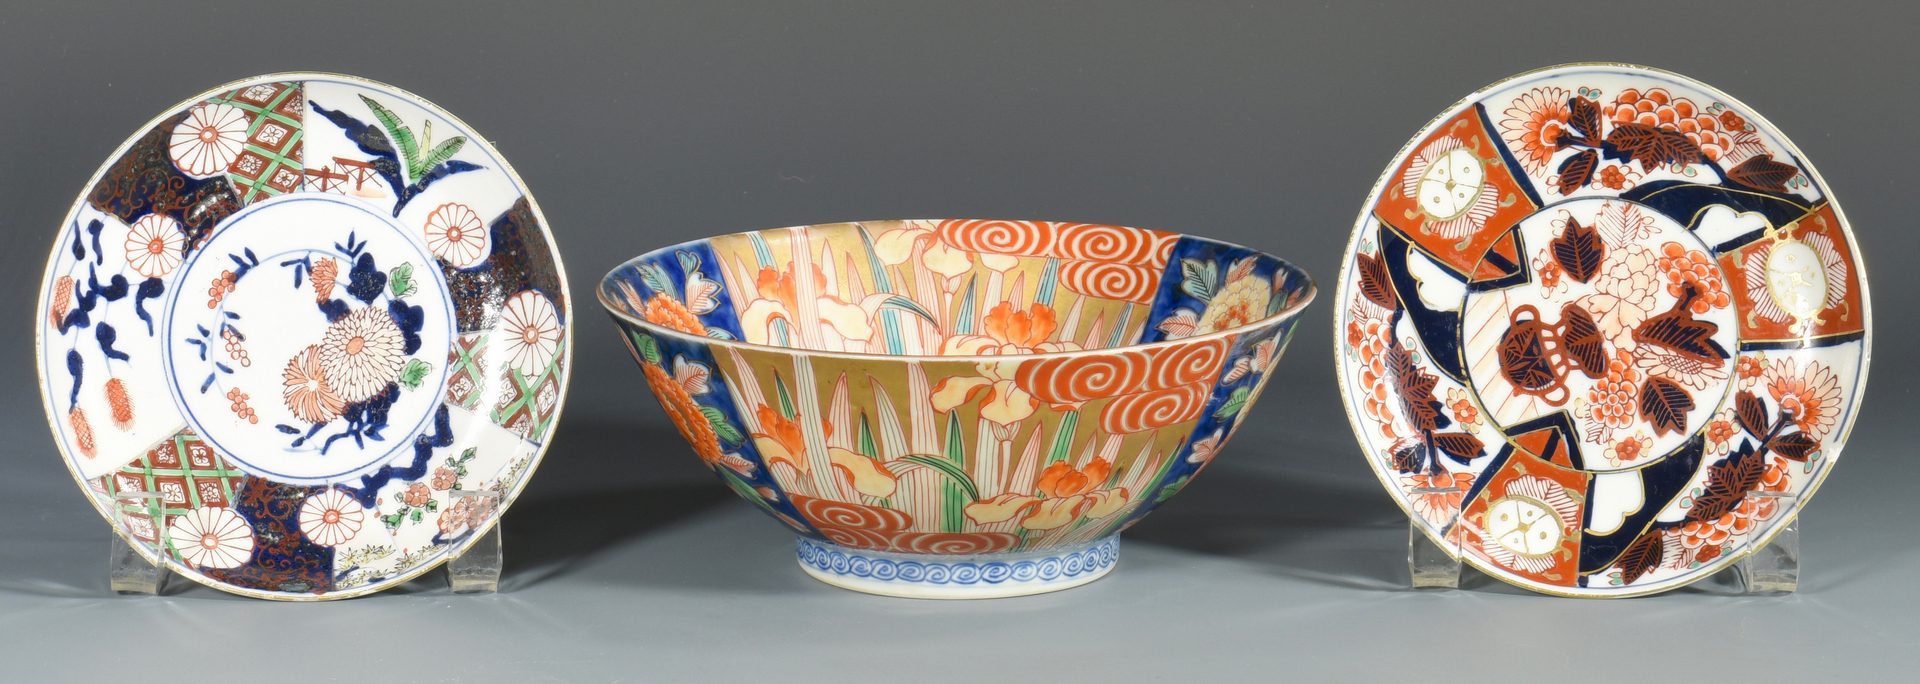 Lot 338: Group of Japanese Imari Porcelain, 8 items